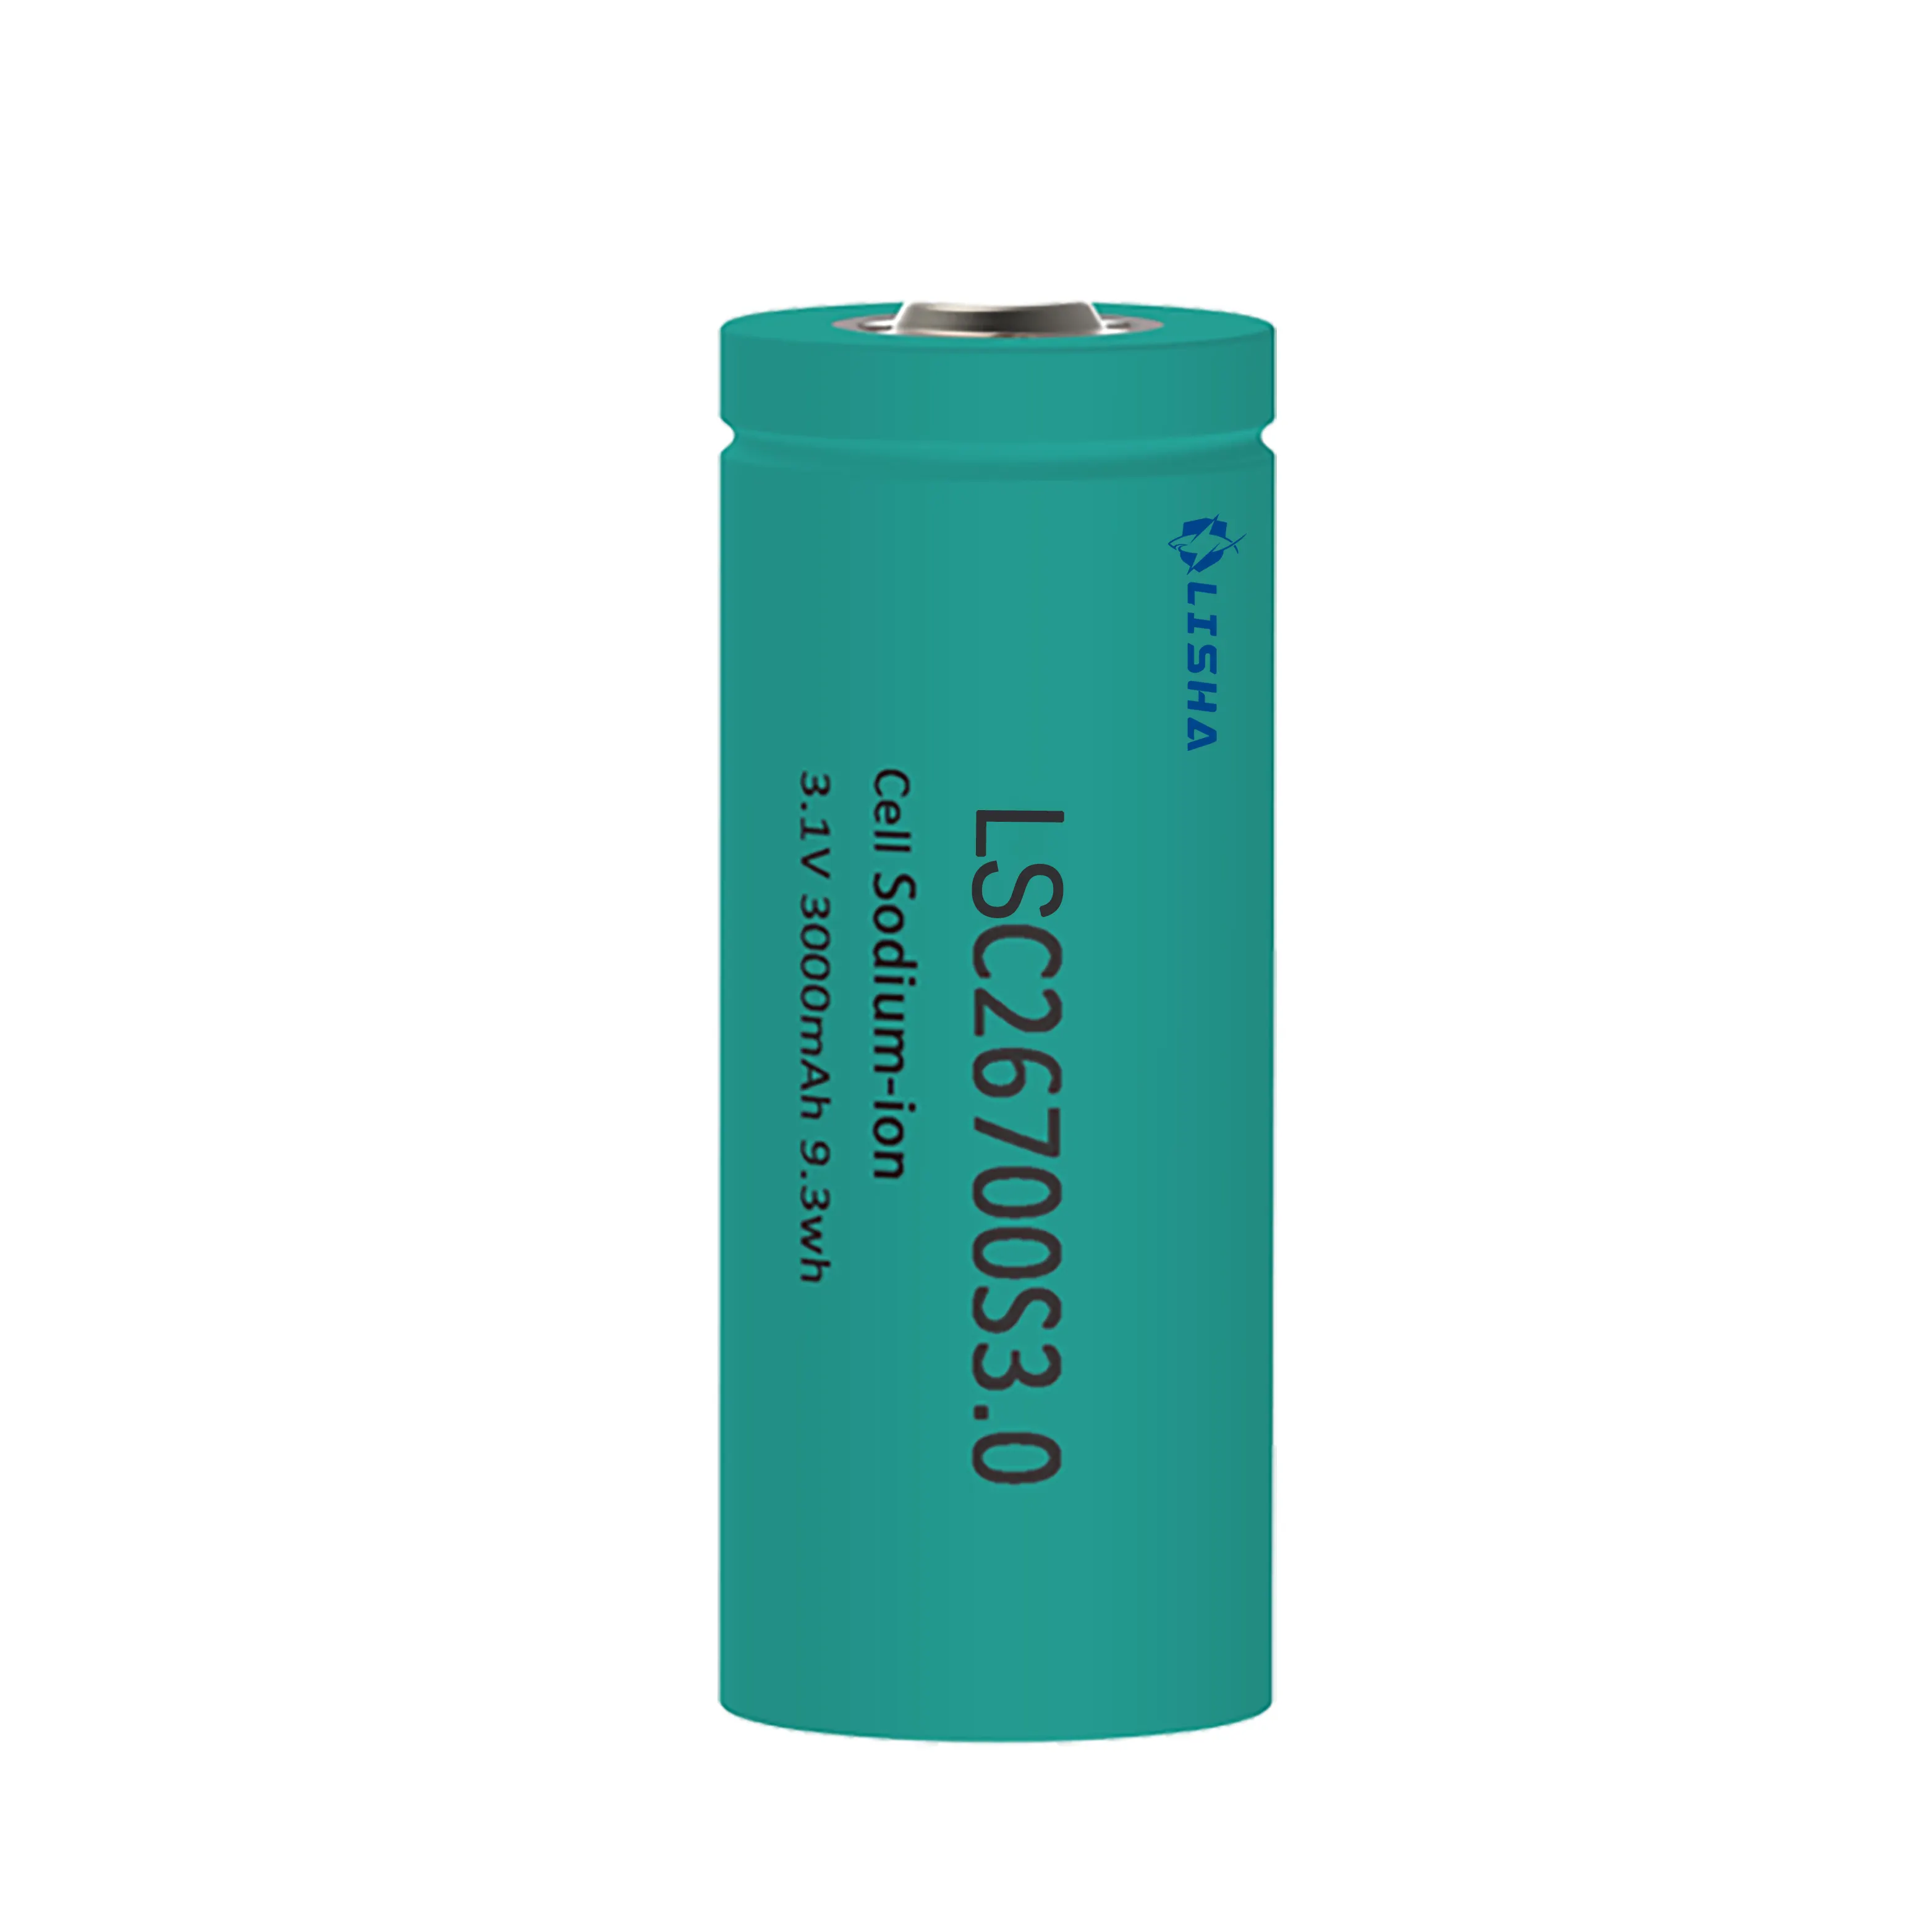 Lisha Großhandels preis 26700 Wiederauf ladbare Natrium batterie von guter Qualität 3,1 V 3000mAh Batterie 3,1 V 3,0 Ah Natrium ionen batterie